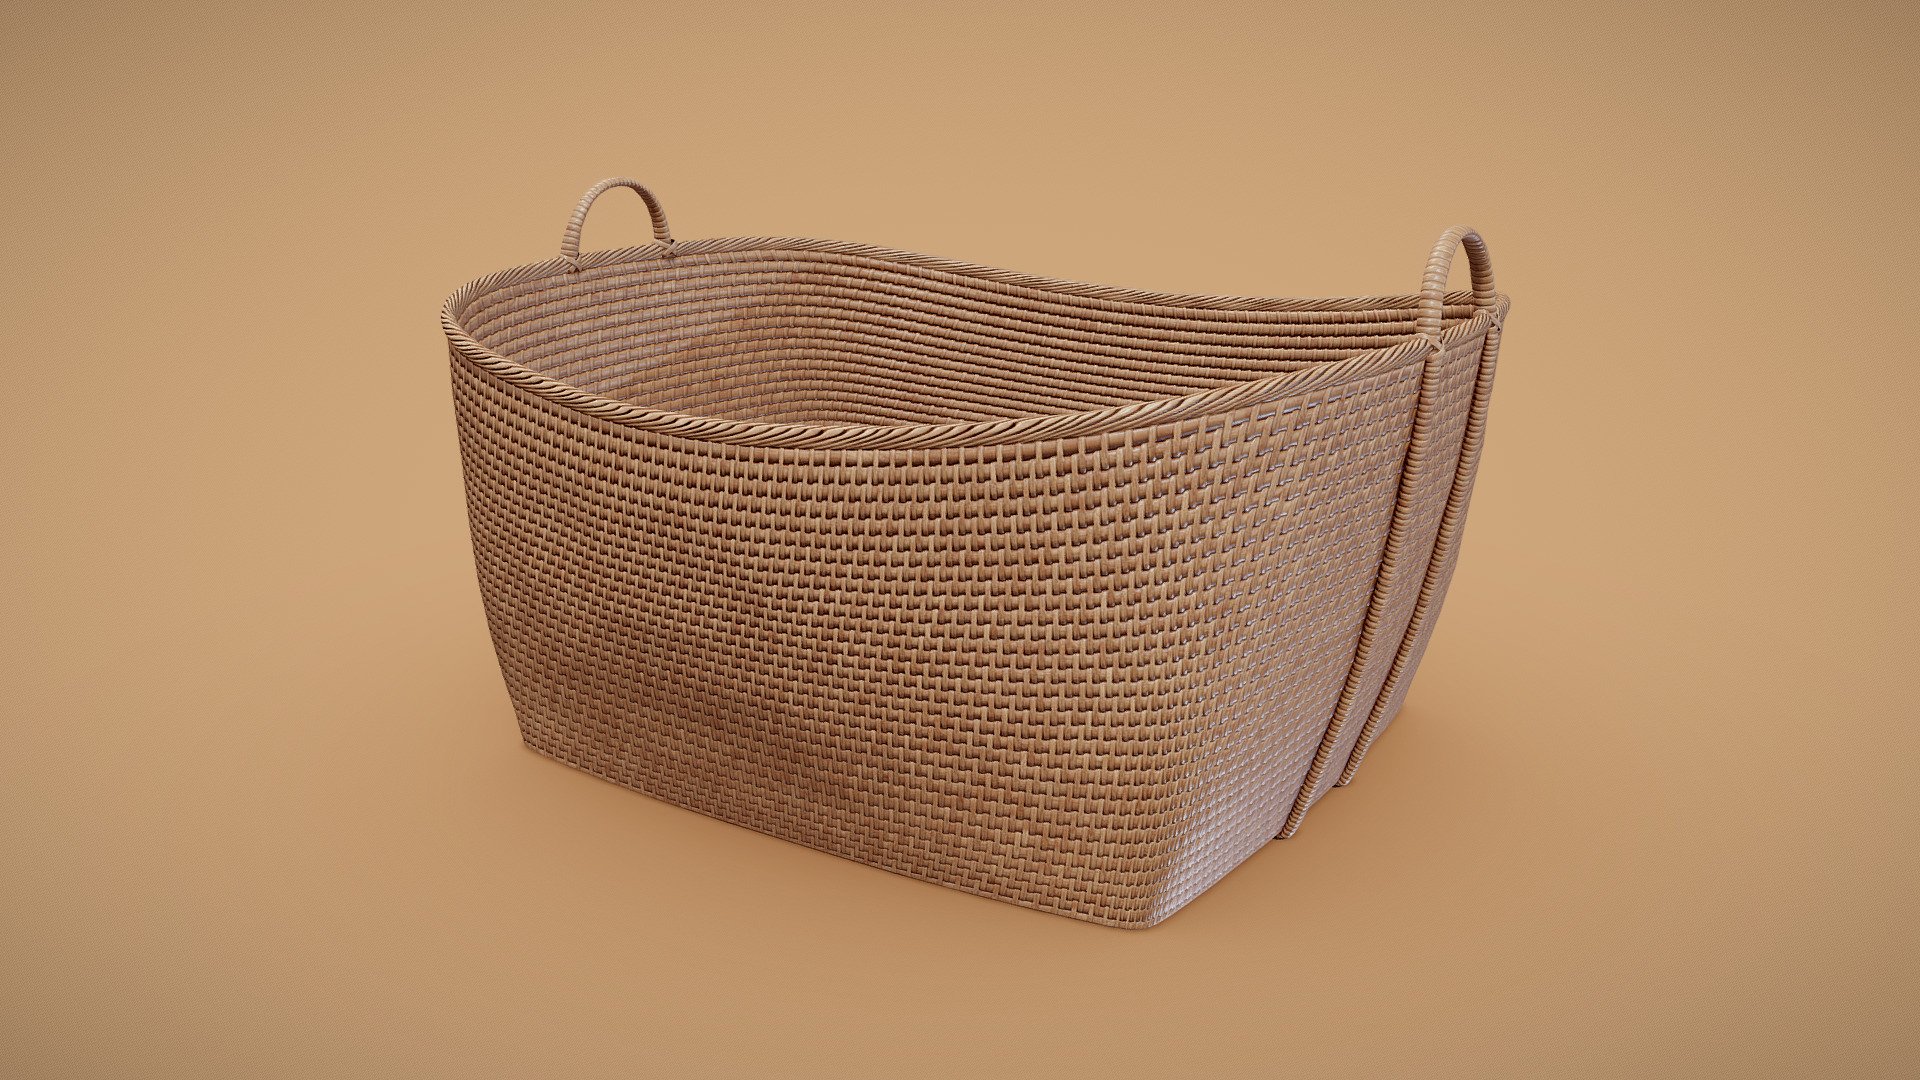 Low-poly rattan storage basket model. 4K PBR textures 3d model